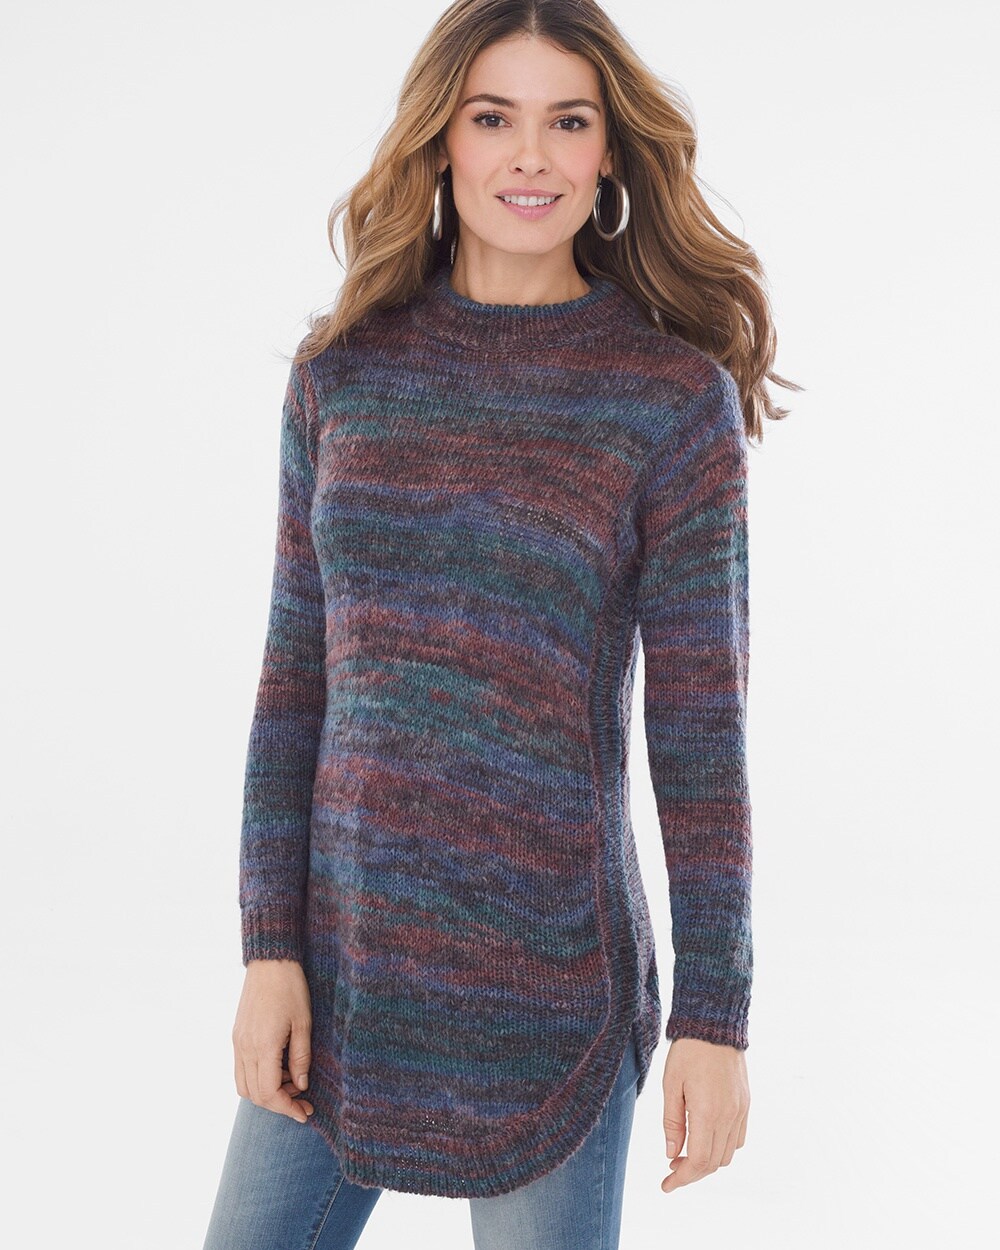 Spacedye Striped Pullover Sweater